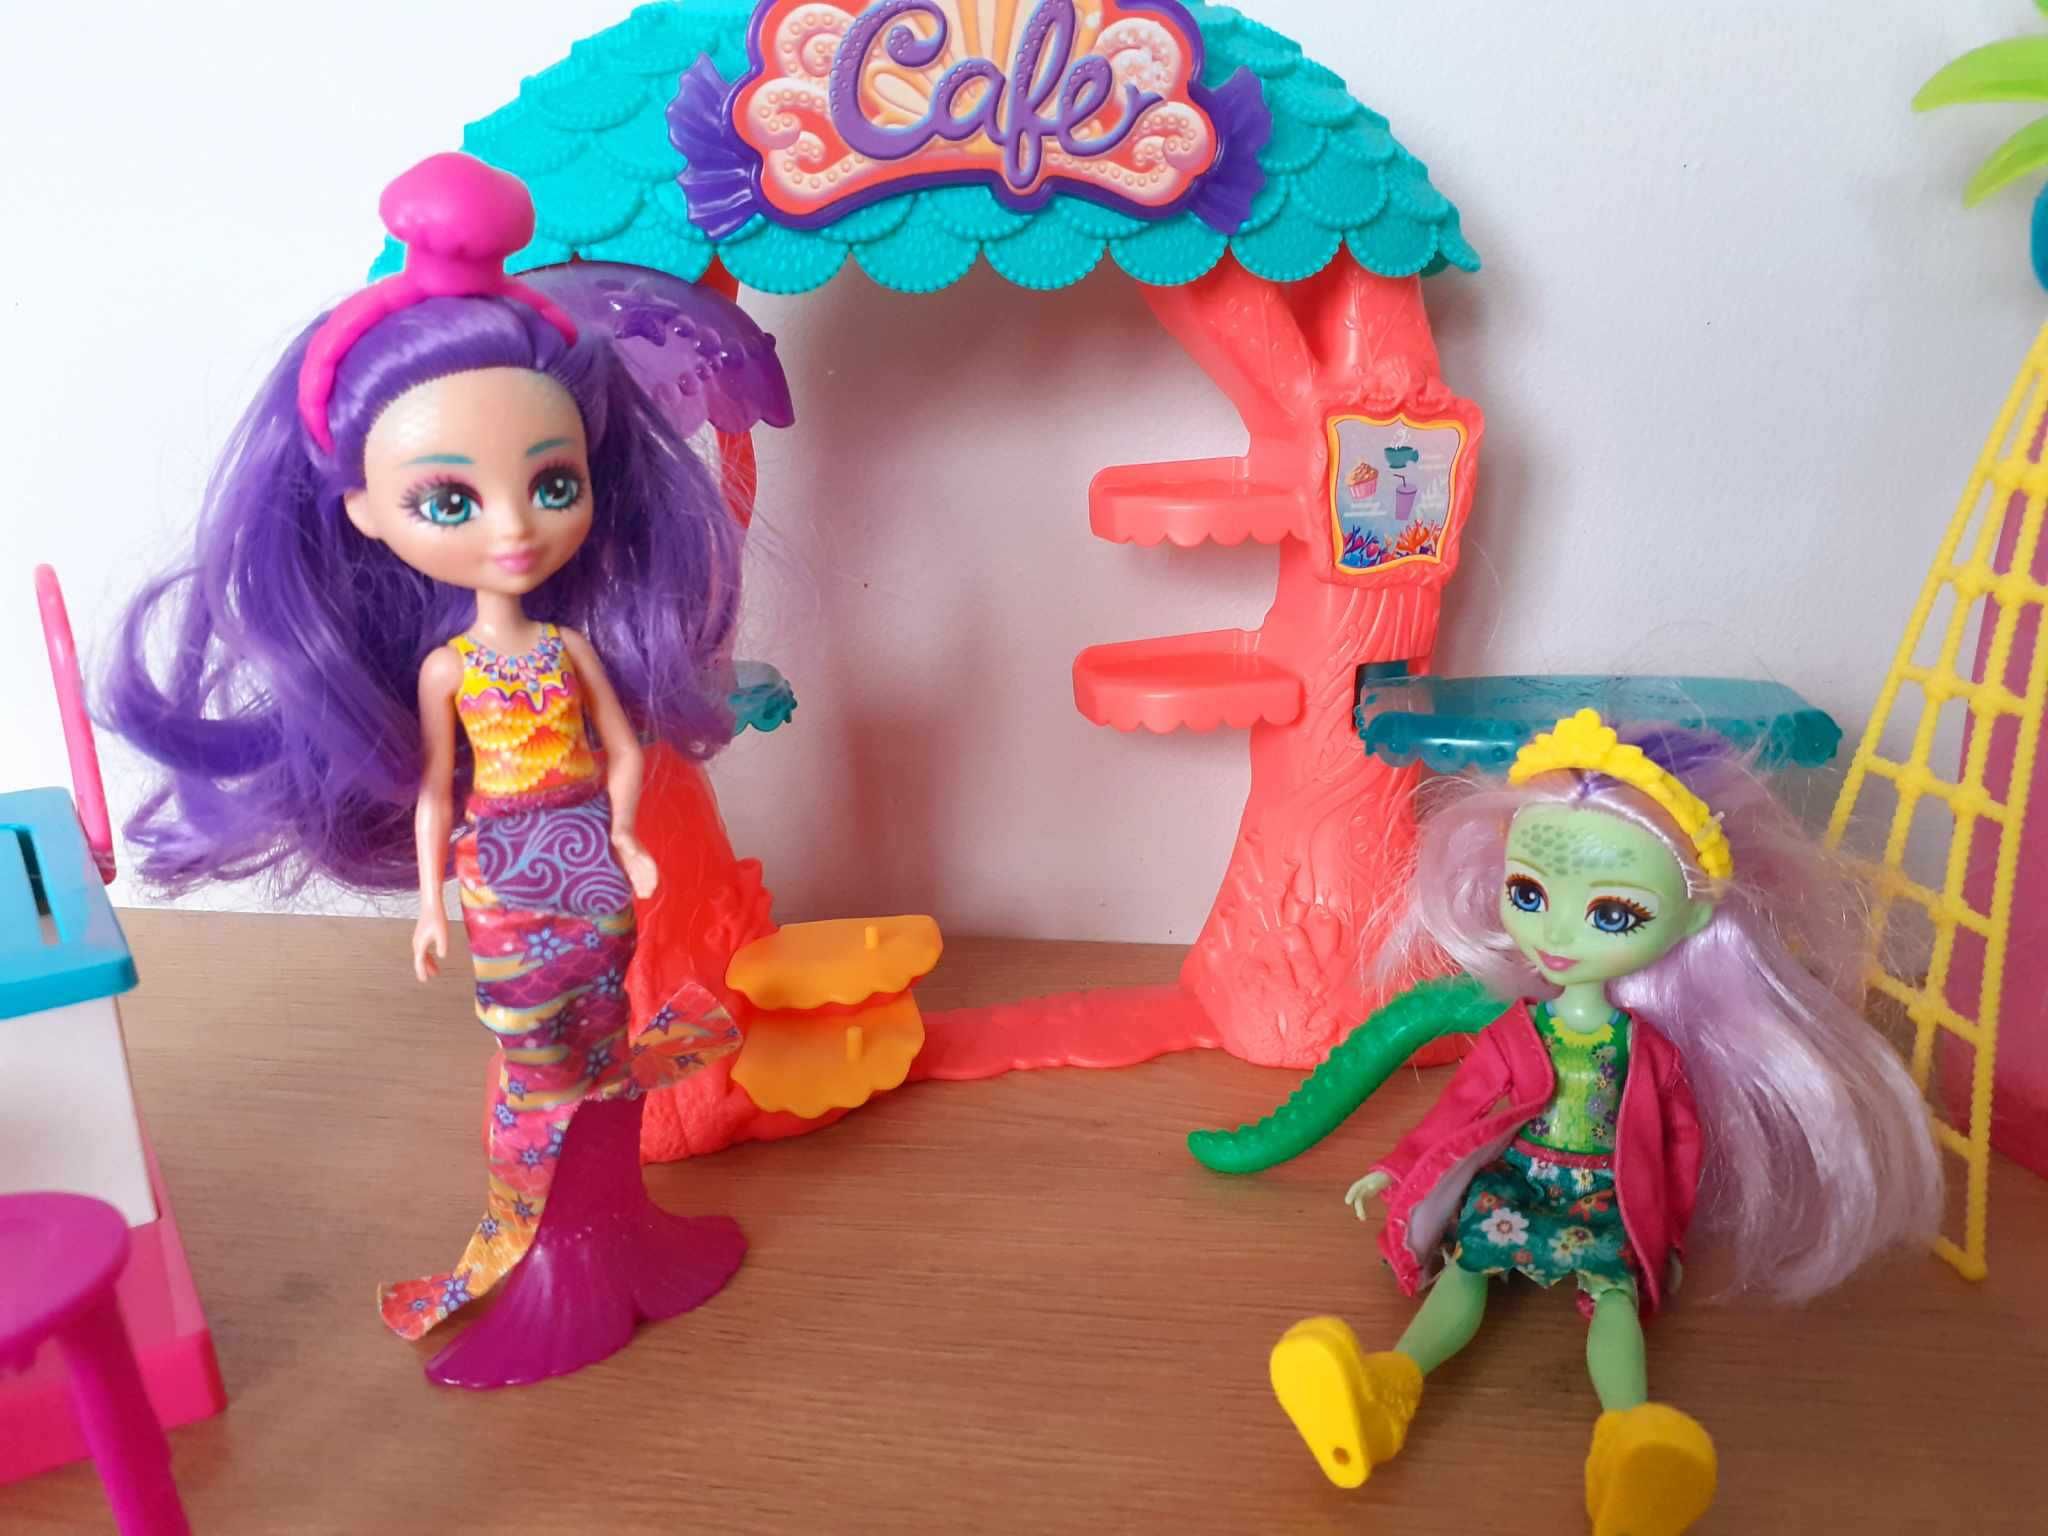 Super zestaw zabawek Barbie, Enchantimals, Polly Pocket